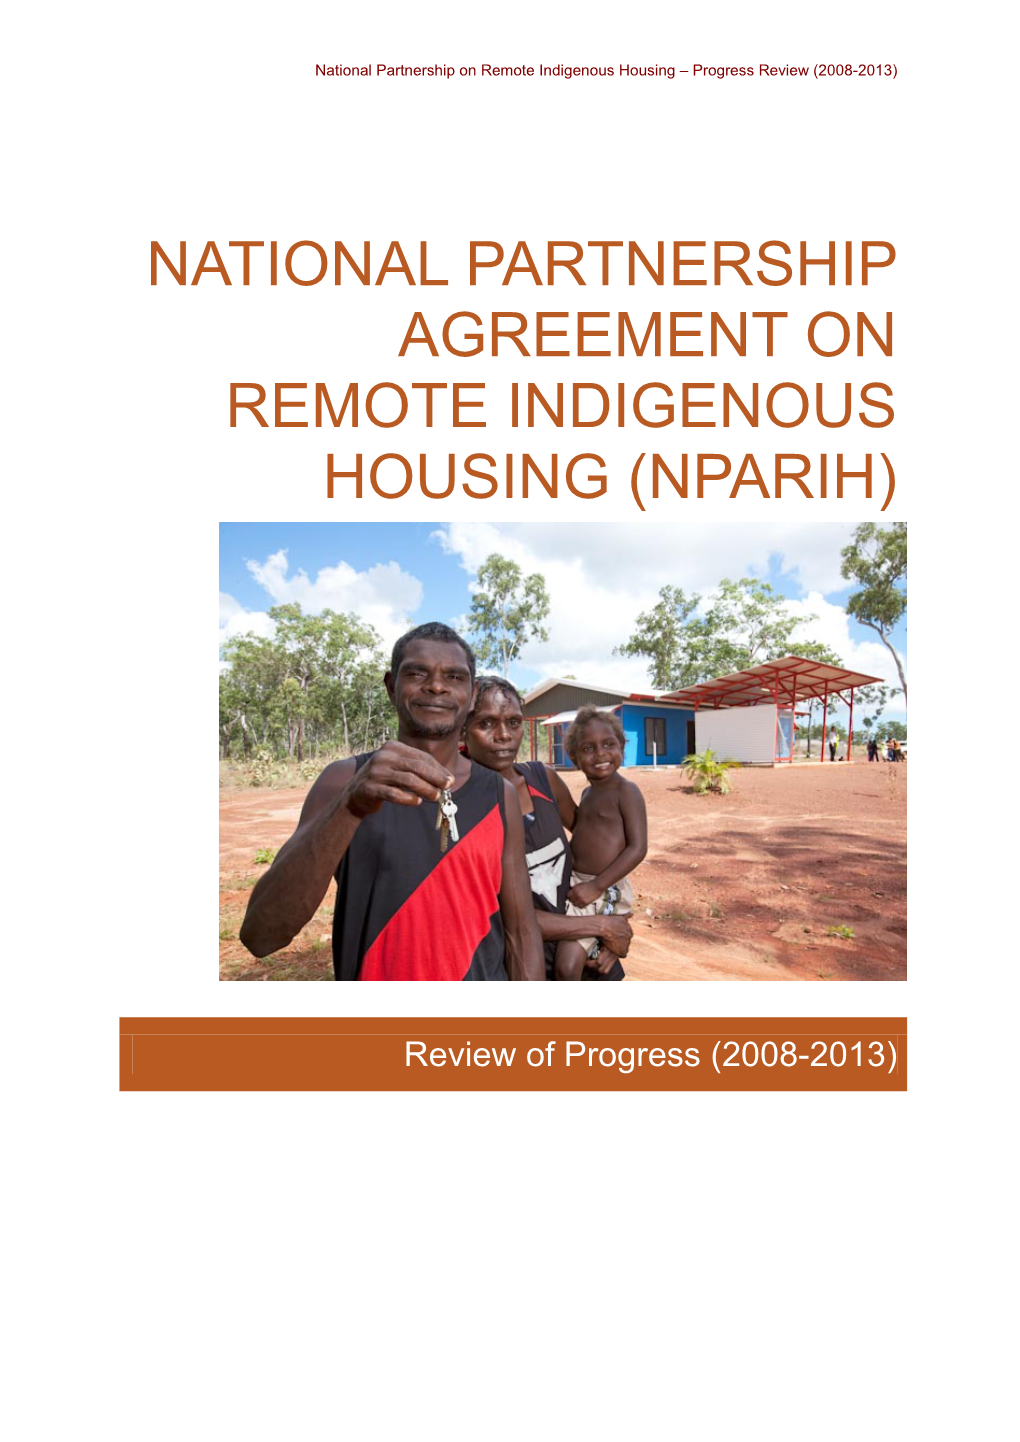 National Partnership Agreement on Remote Indigenous Housing (Nparih)